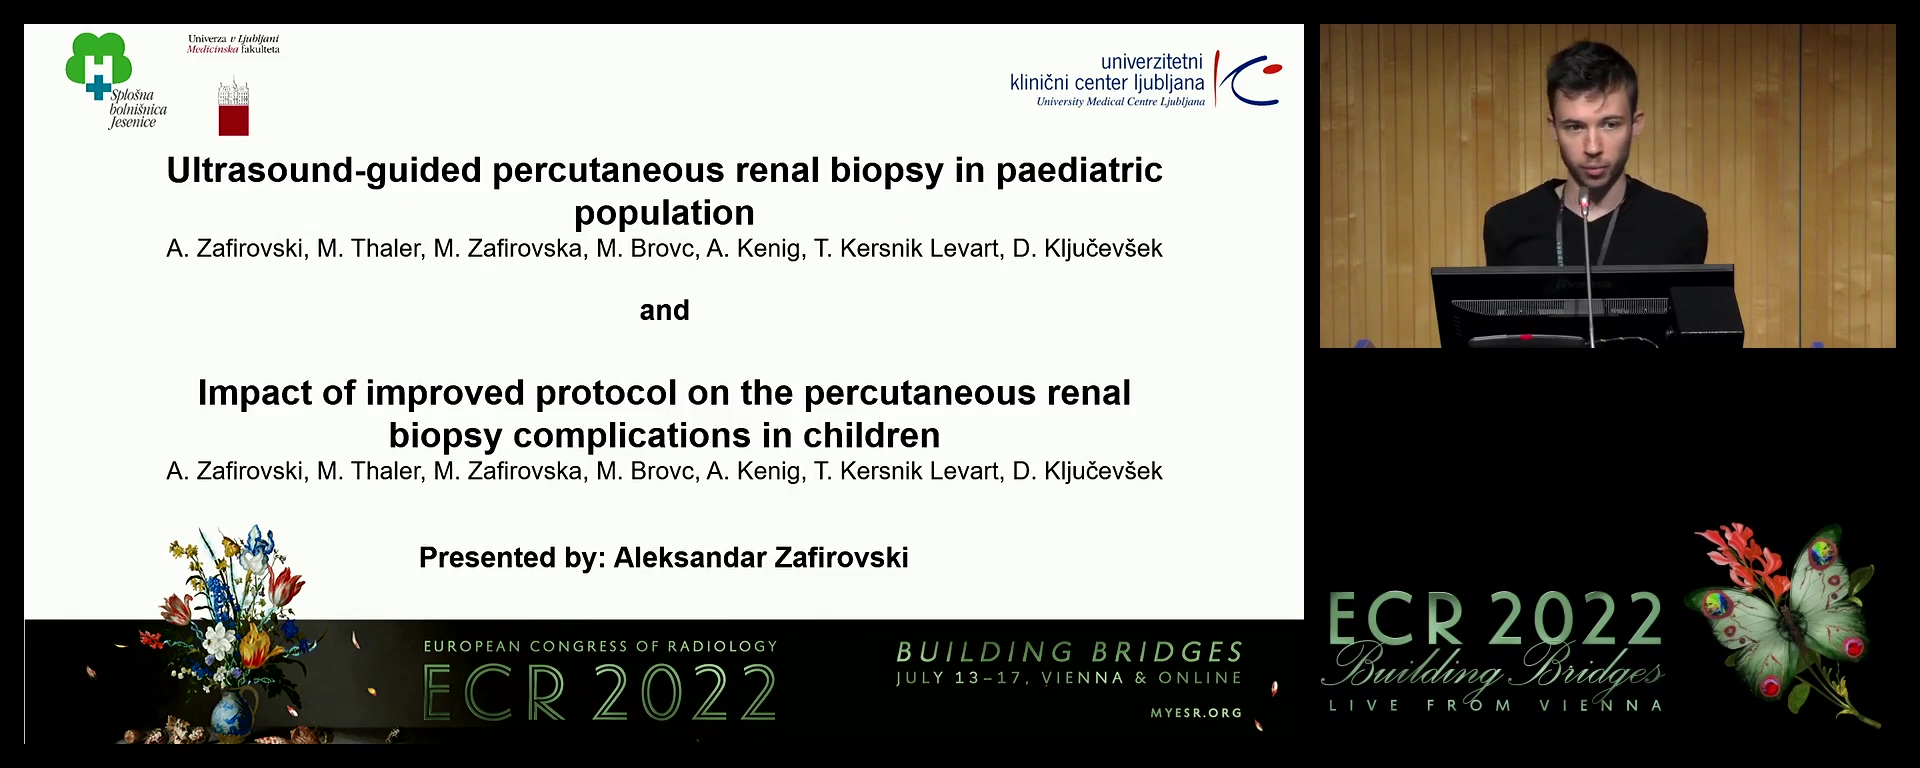 Ultrasound-guided percutaneous renal biopsy in paediatric population - Aleksandar Zafirovski, Kočevje / SI